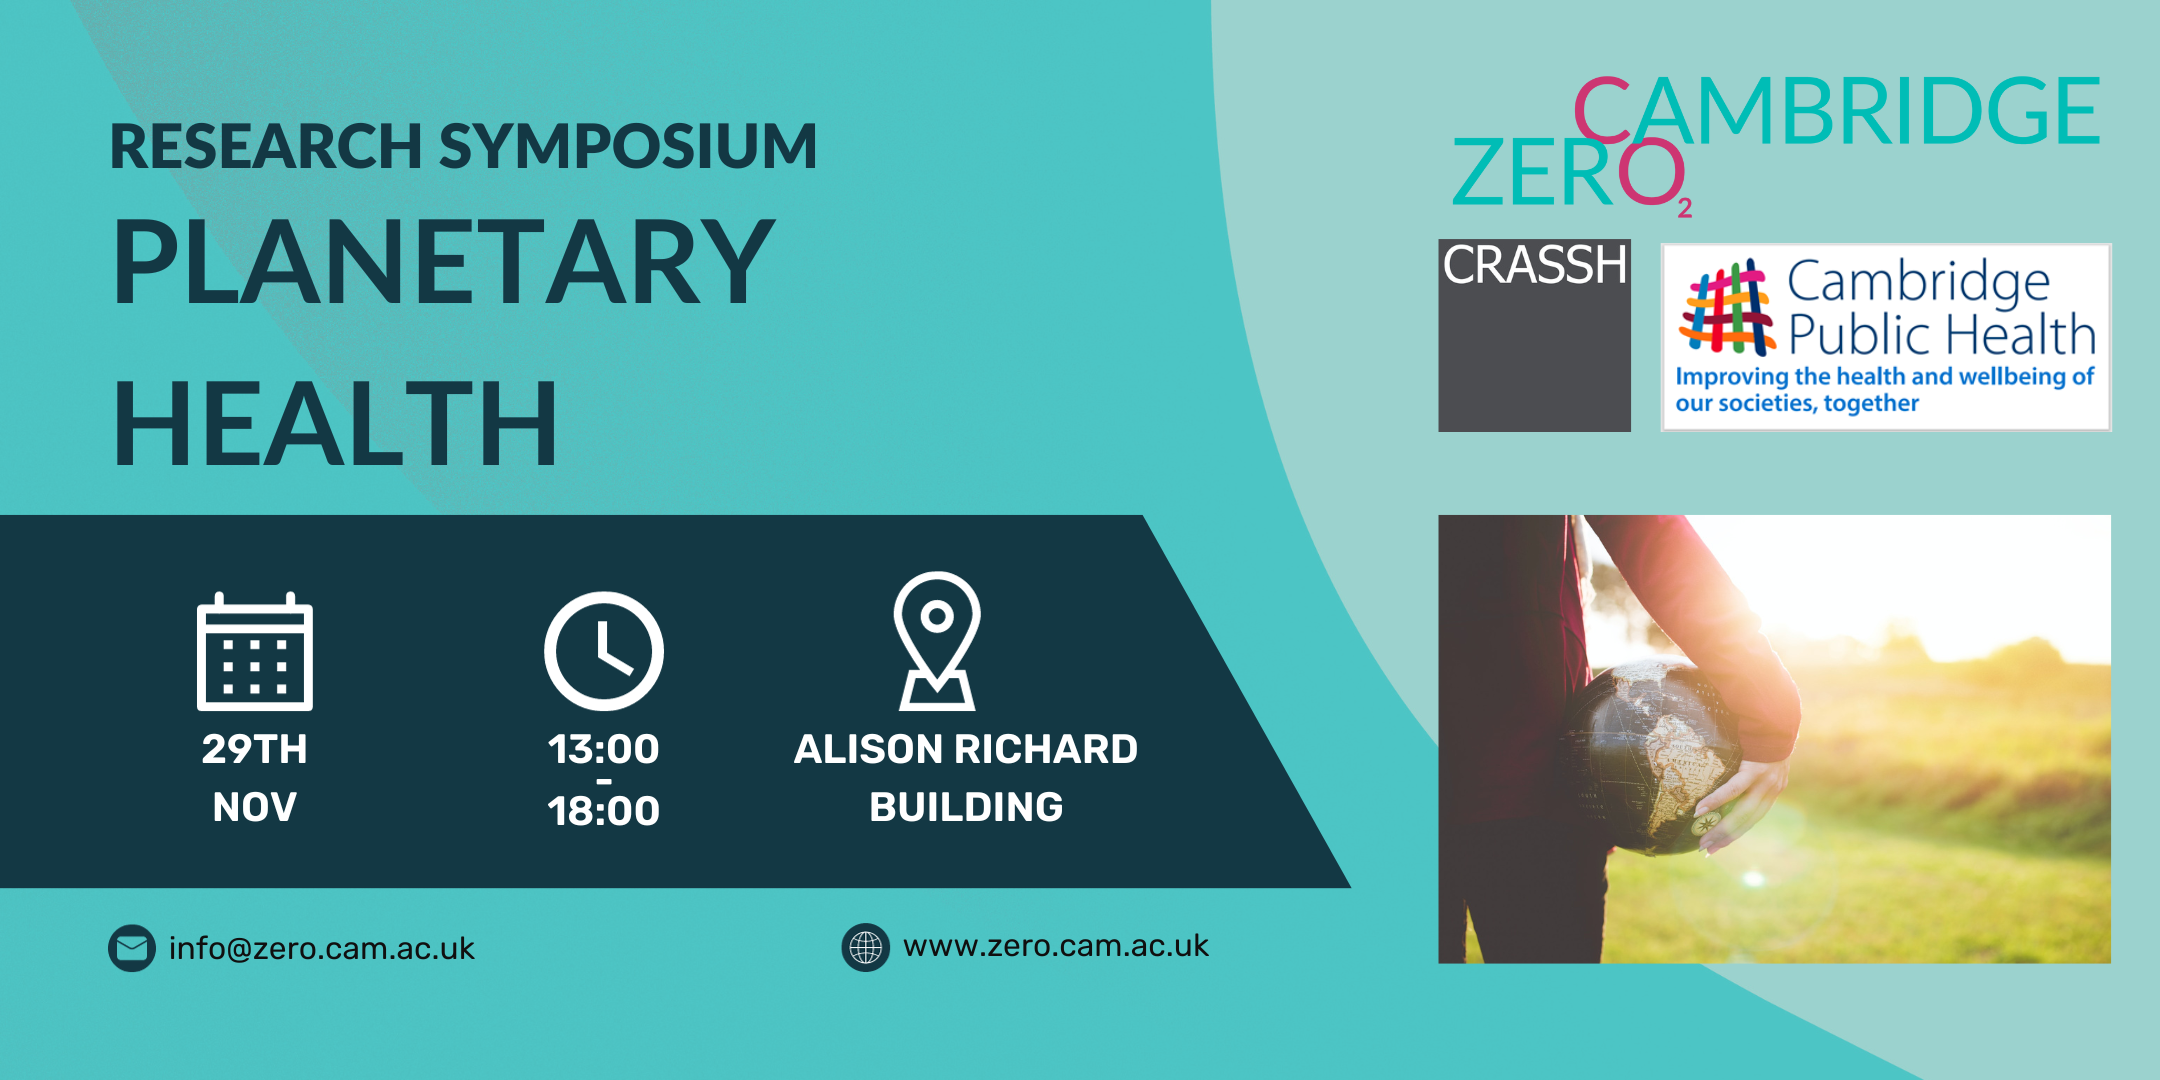 Symposium on 29th November at Alison Richards building between 13 and 18 o'clock